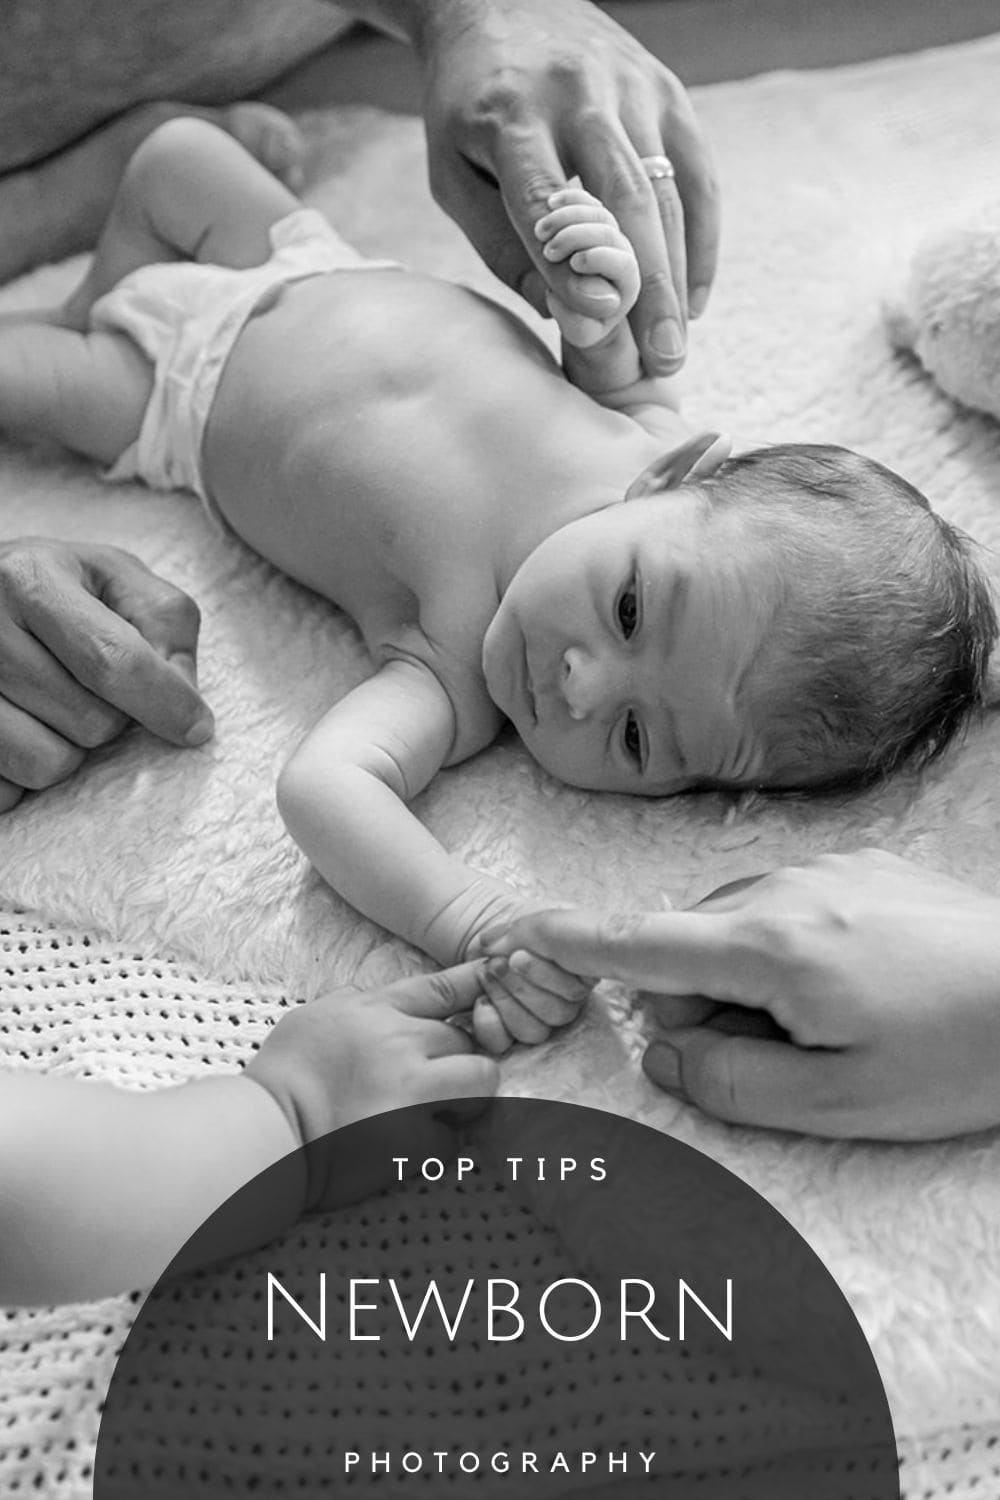 Newborn Photography Top tips